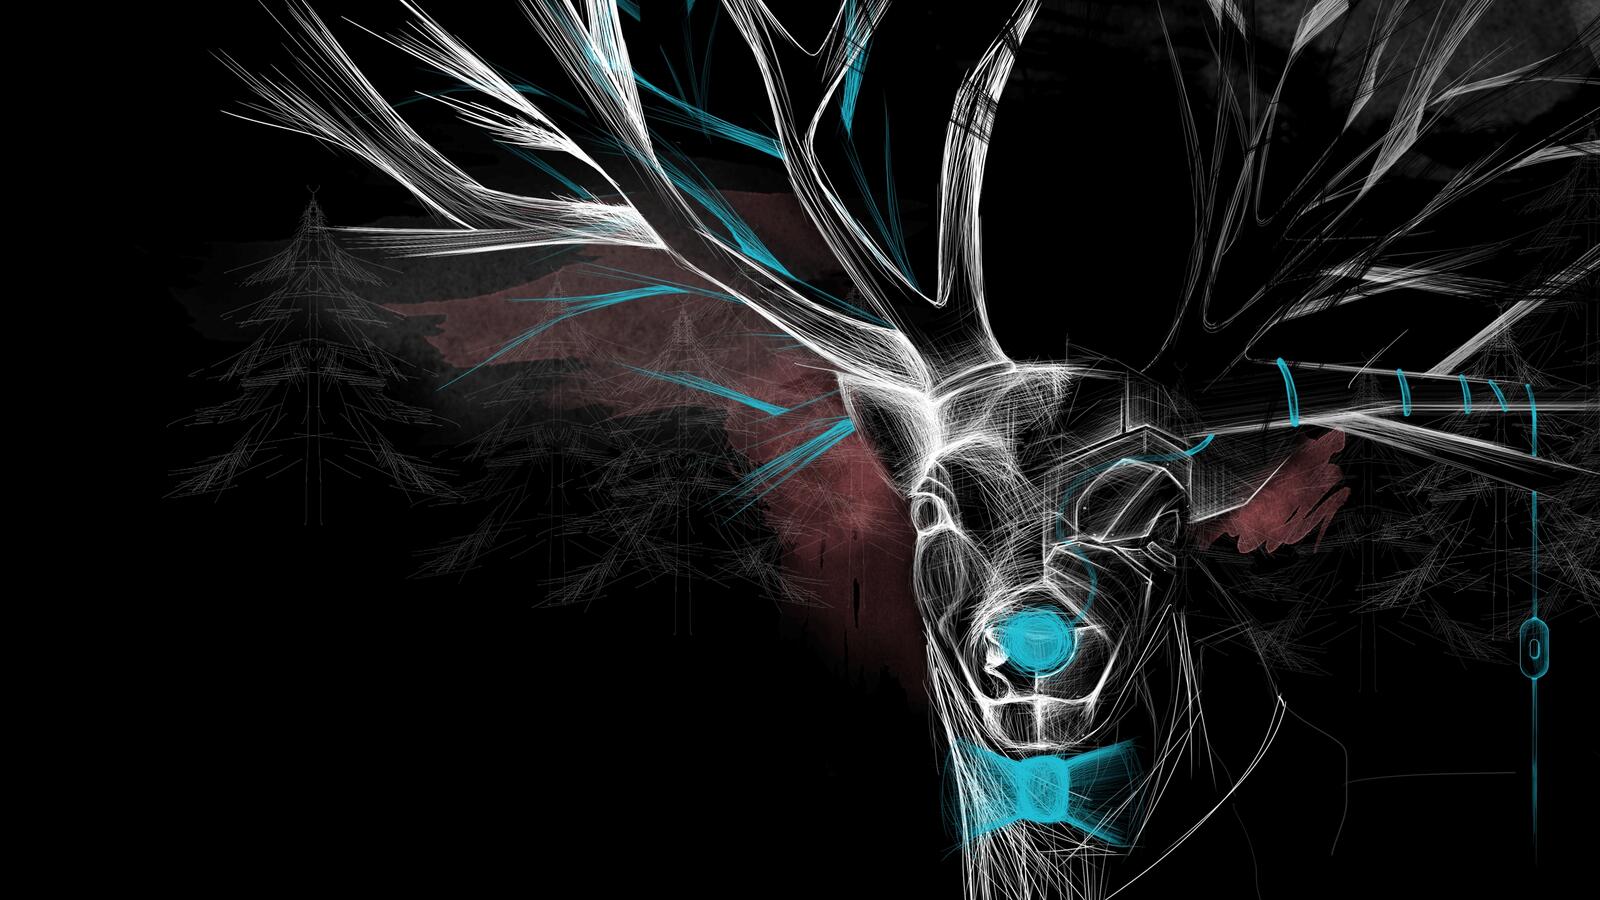 Wallpapers horns wallpaper reindeer digital art deer on the desktop